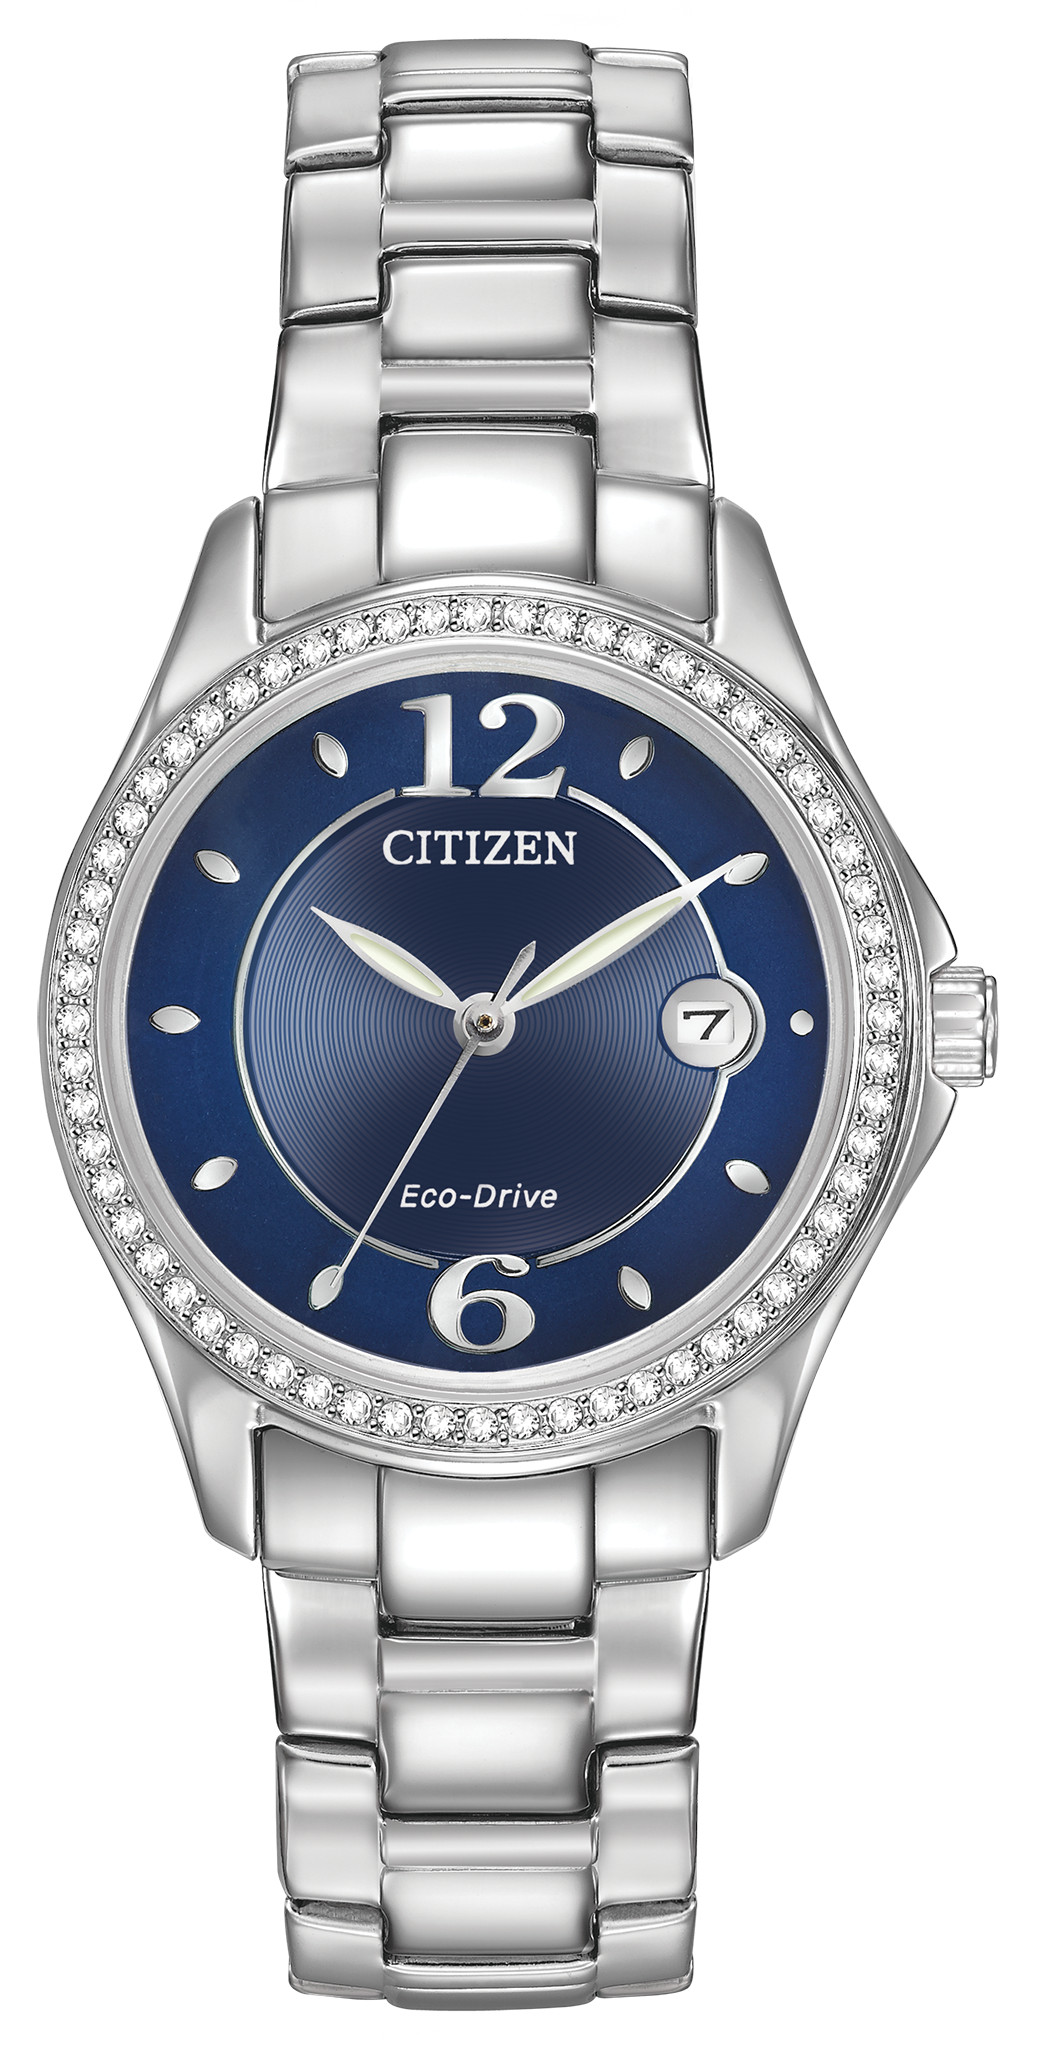 CITIZEN 社外 シチズン クリスタル風防(平面三味型) 厚み1.14/CITIZEN Crystal Watch glass 4-850040/850050/850726(Y-C176)